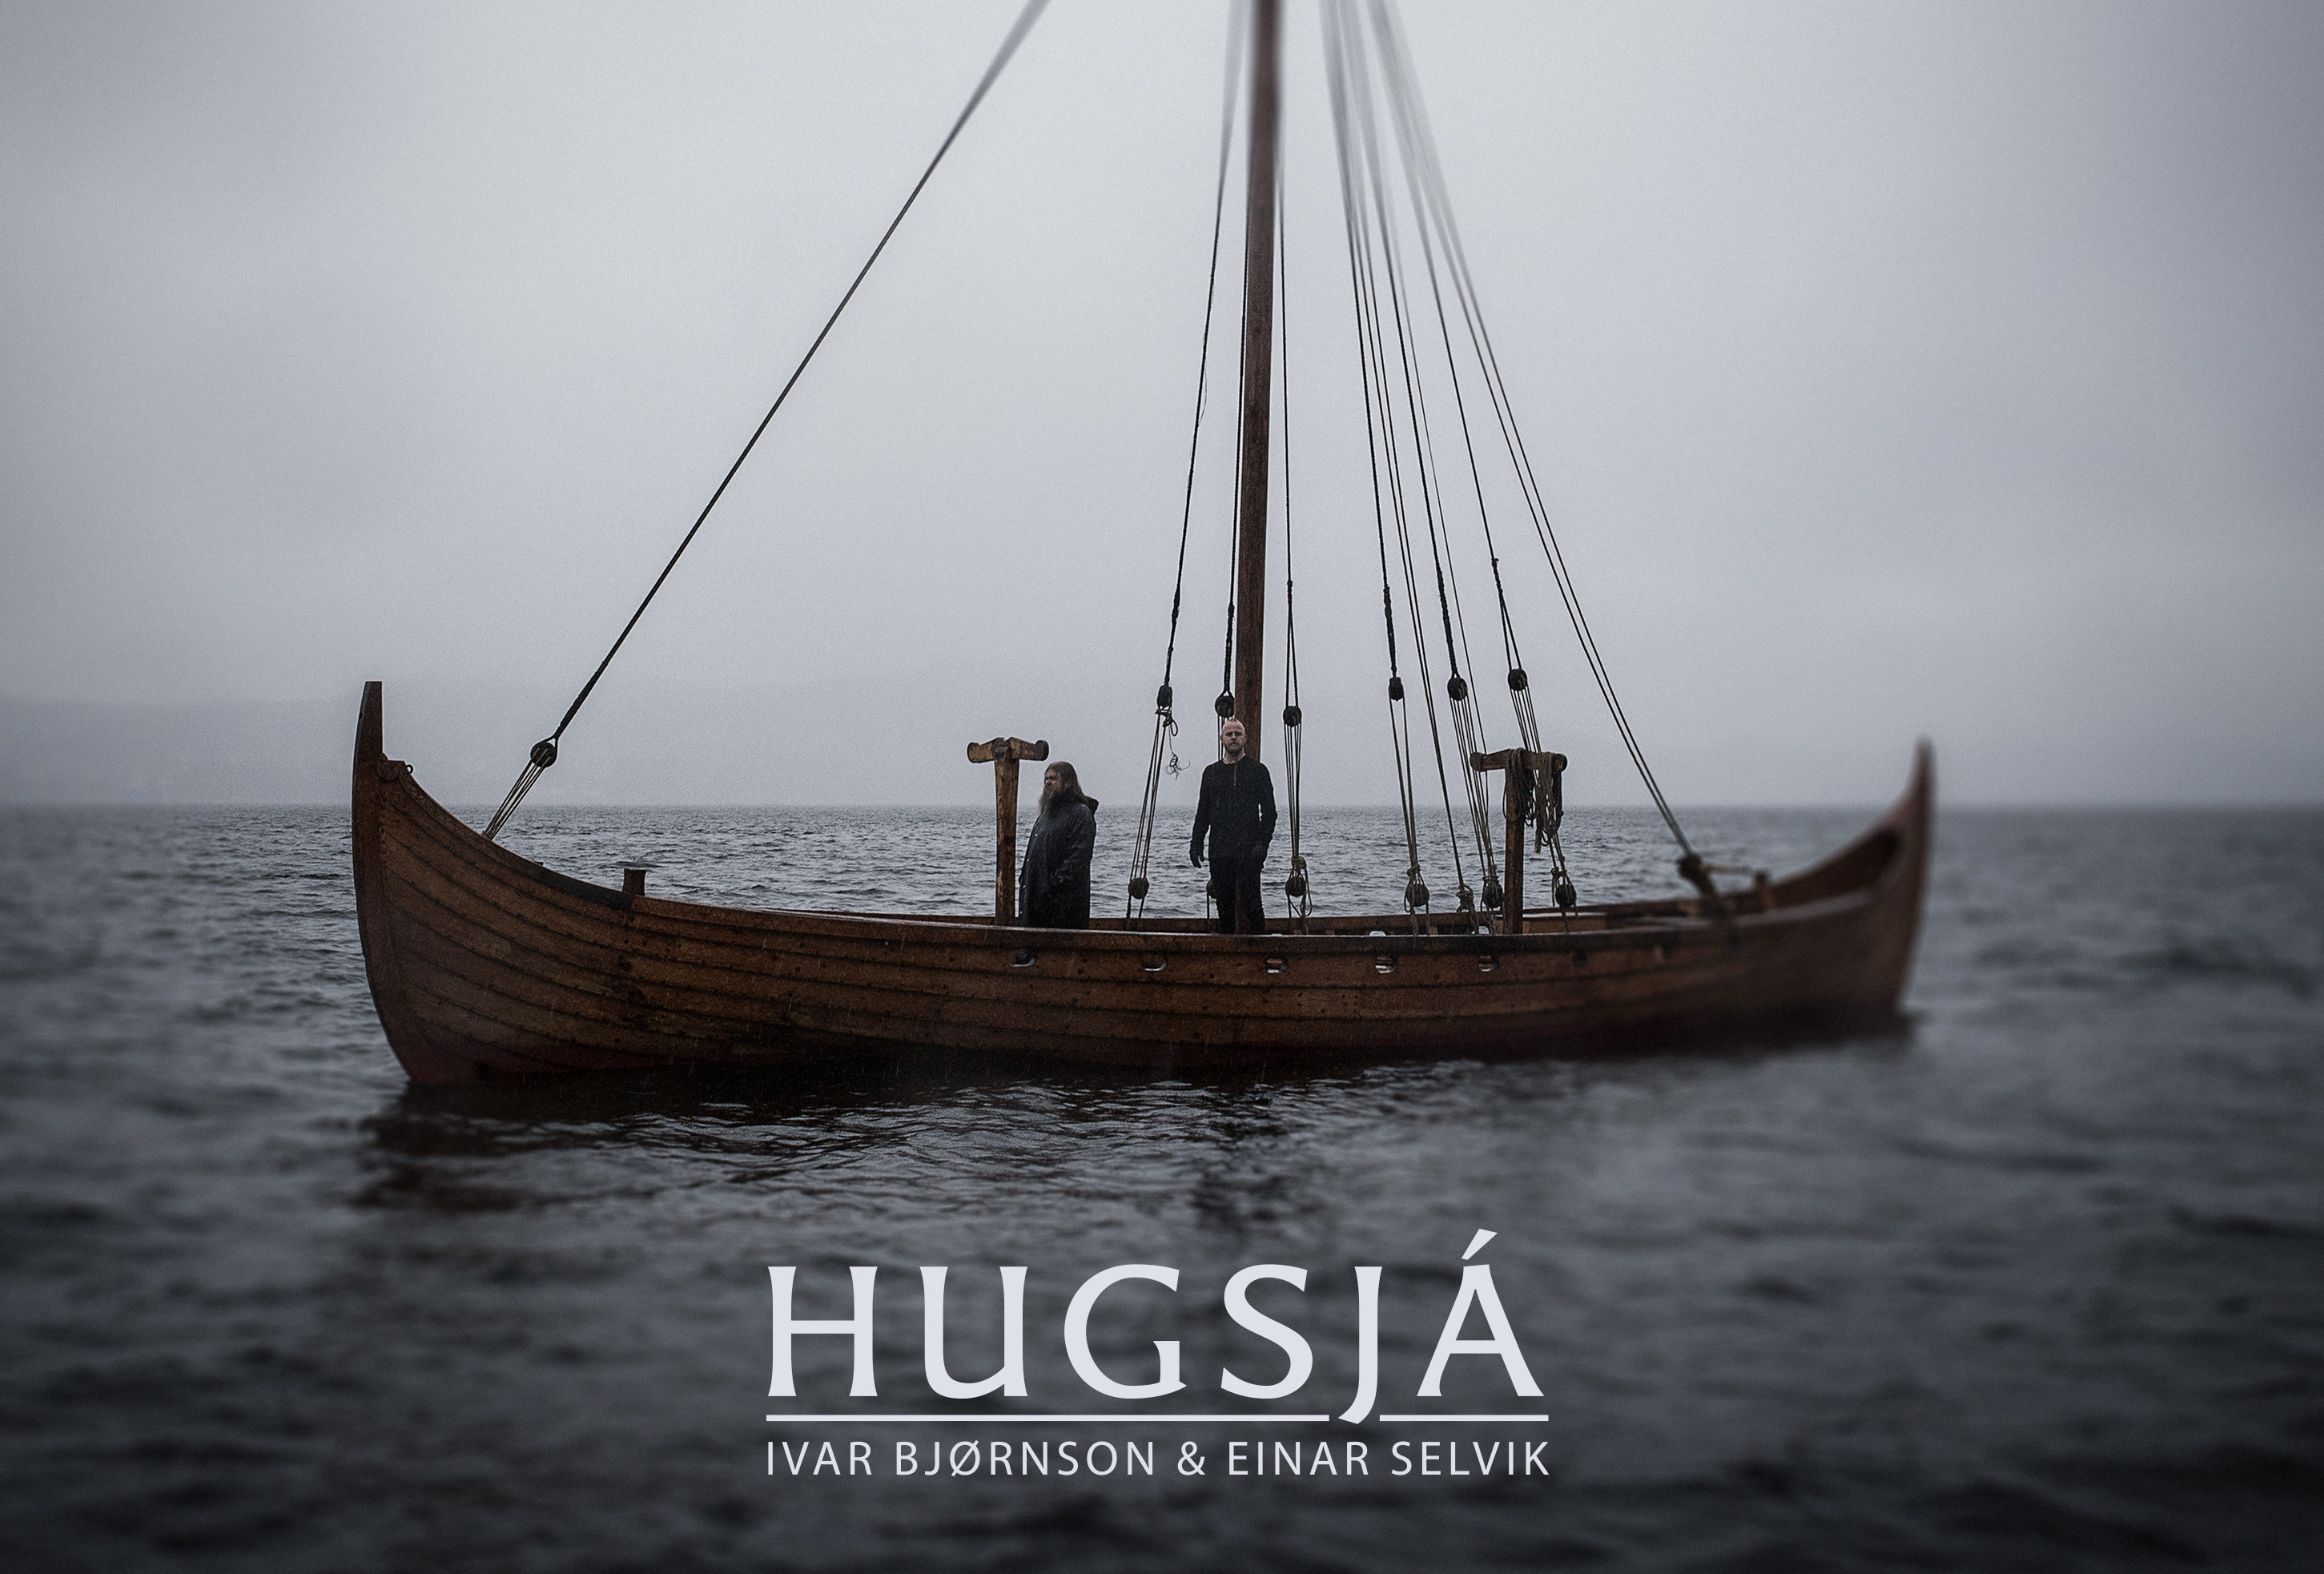 Album Review Hugsja Ivar Bjornson Einar Selvik Distorted Sound Magazine